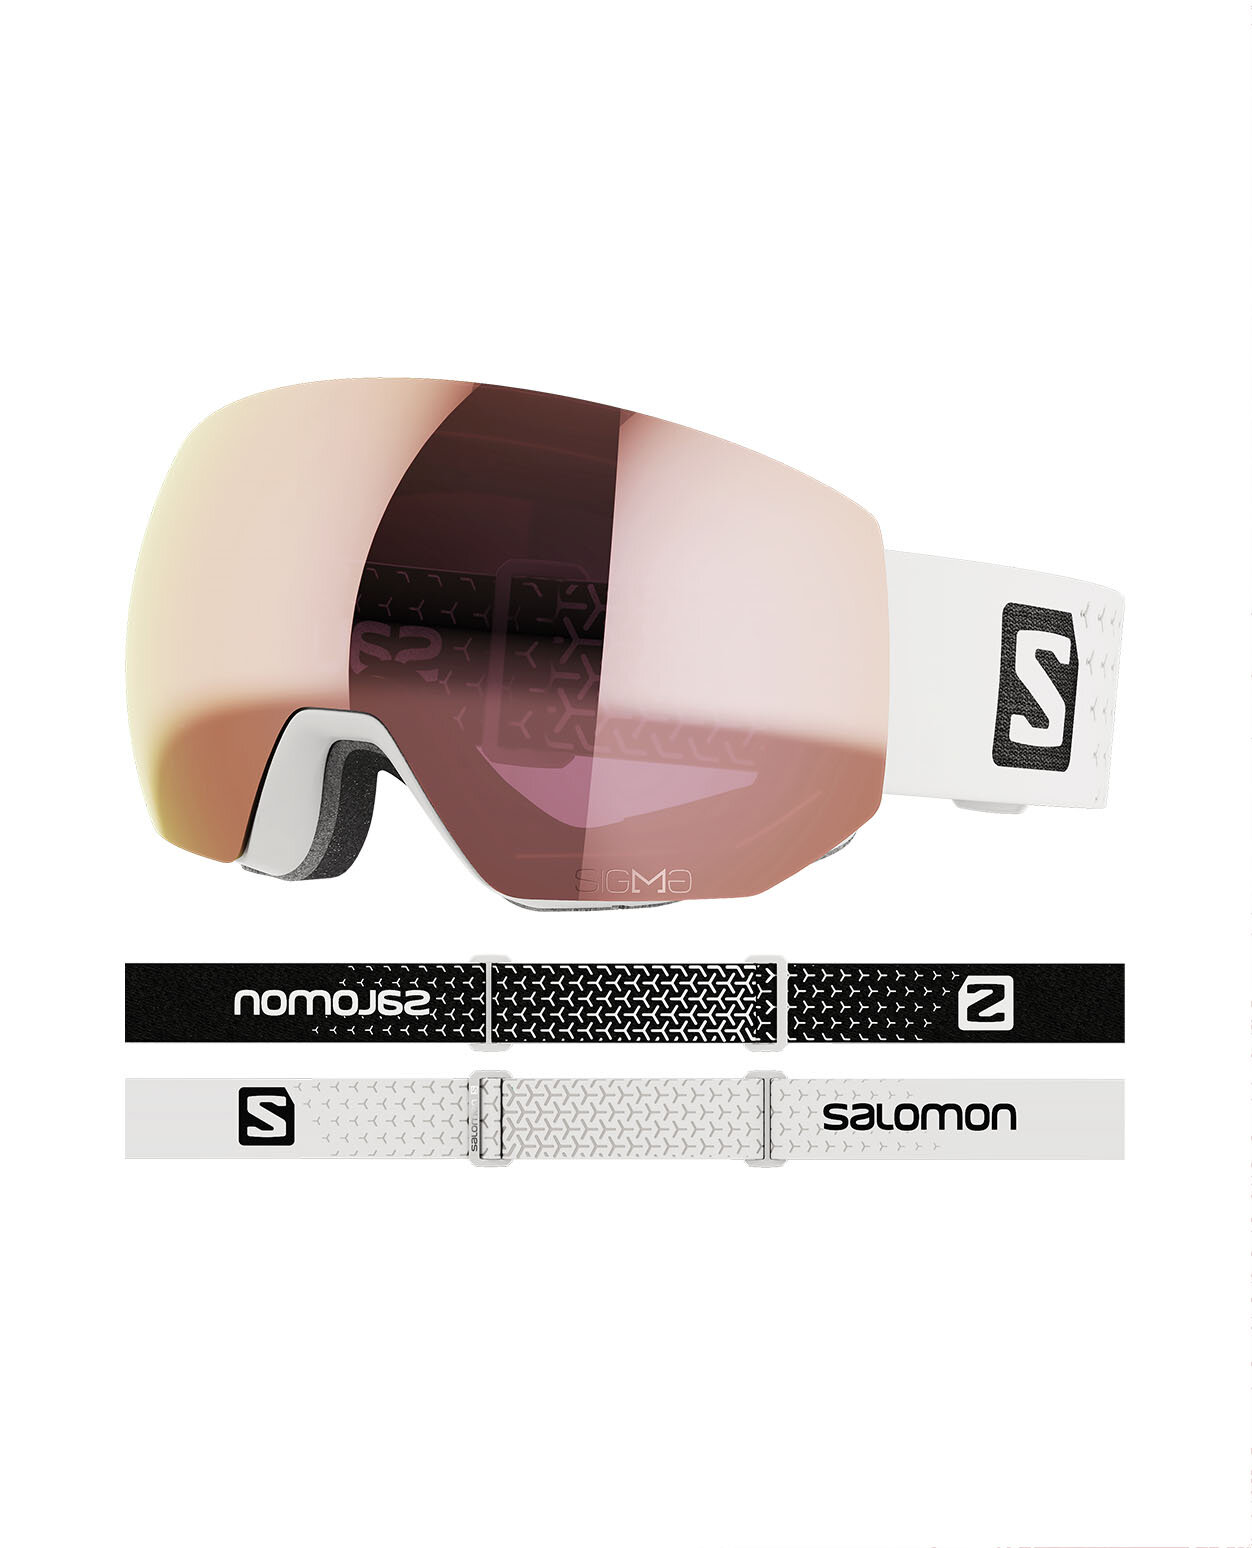 Salomon Radium Pro Sigma White/Silver Pink